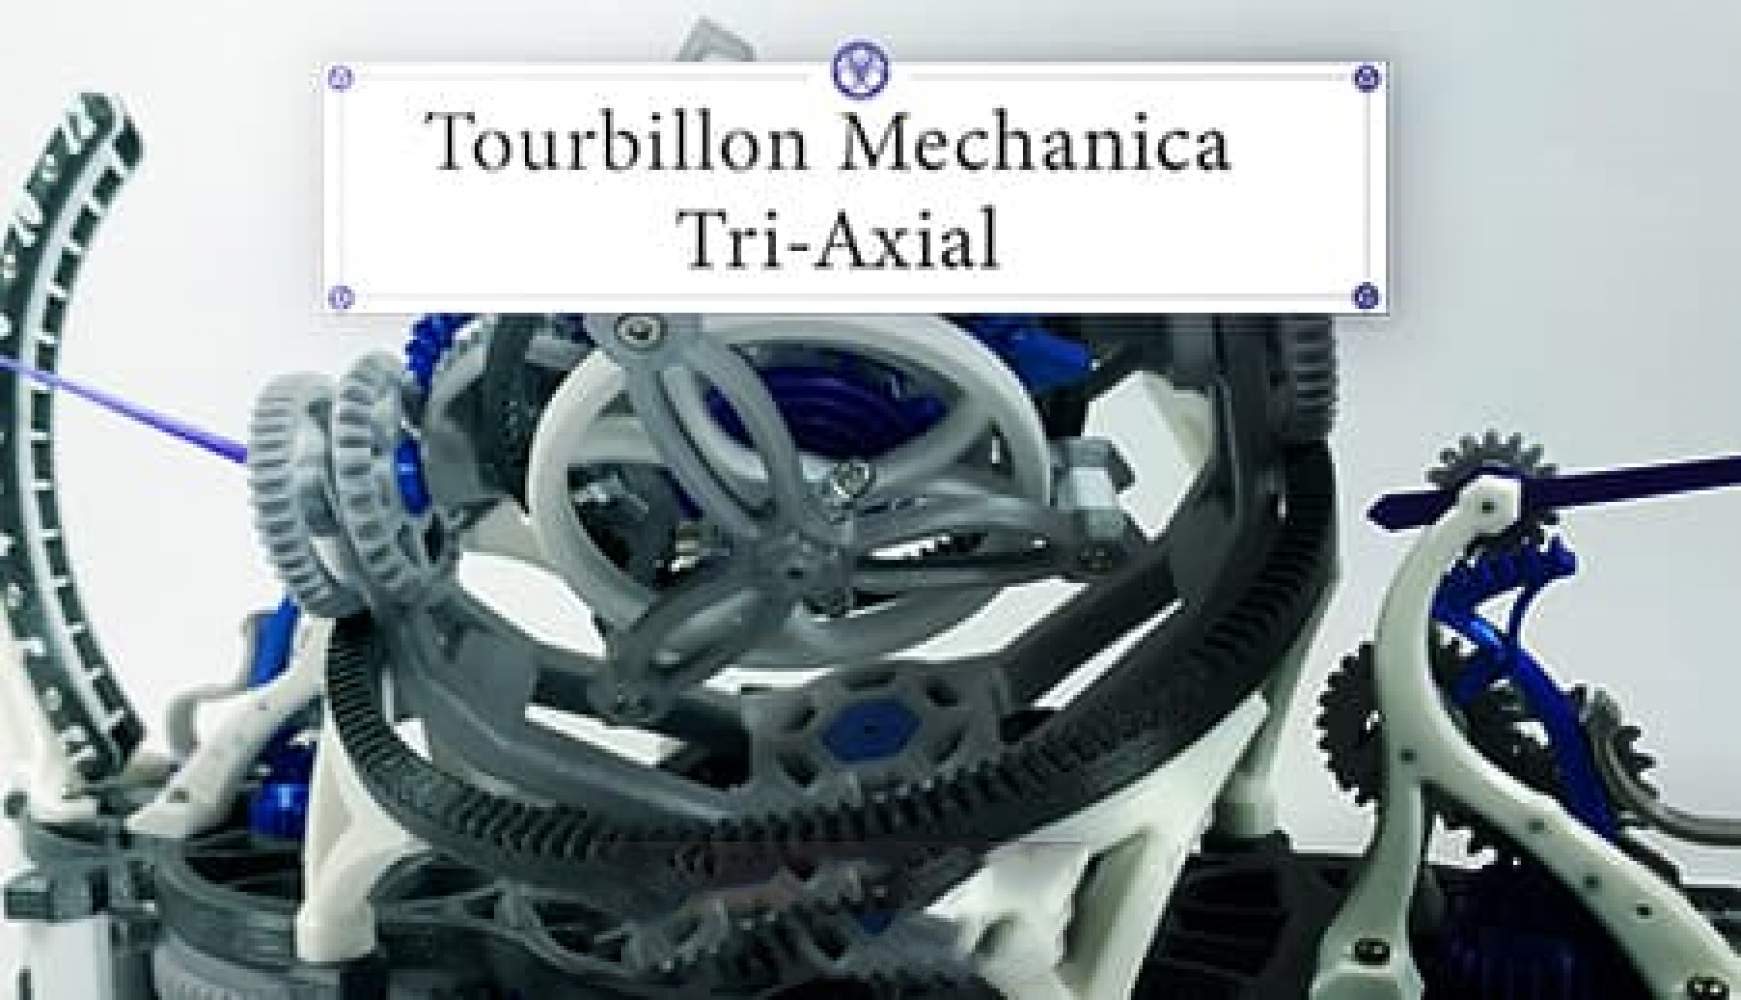 Tourbillon Mechanica Tri-Axial Crowdfunding